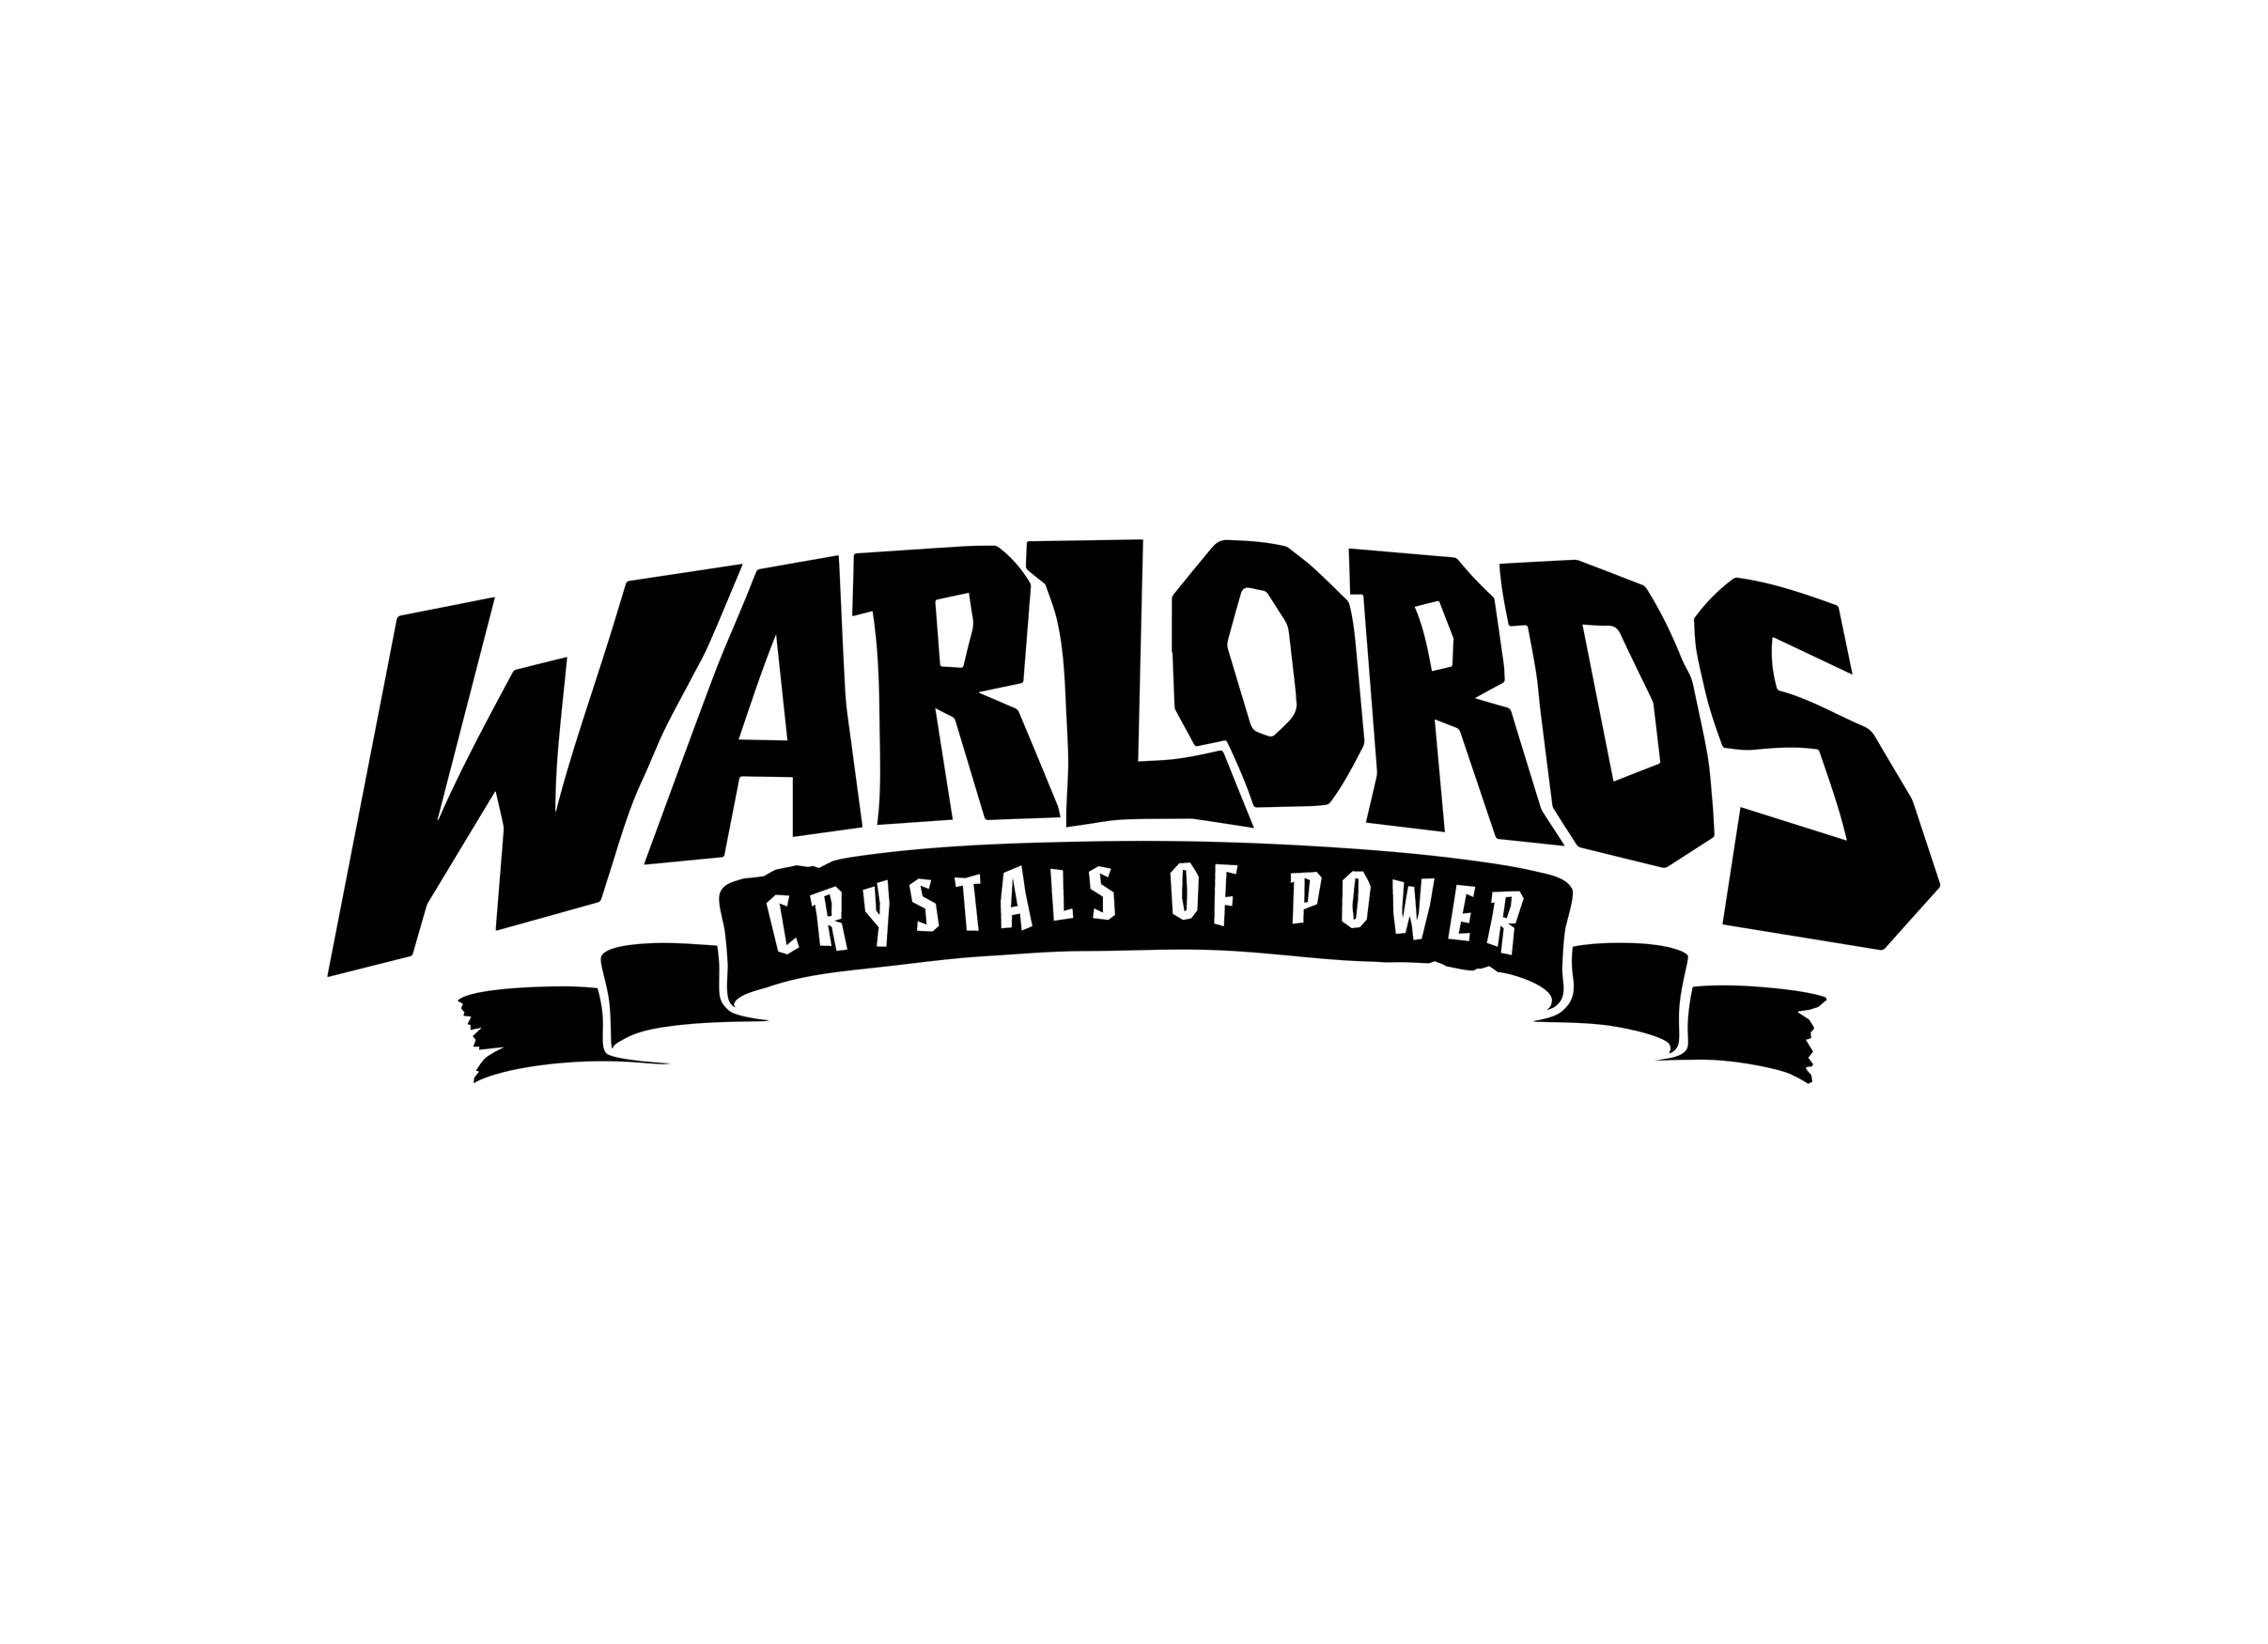  04_logo-04-greyscaleinverted_warlords.png thumbnail